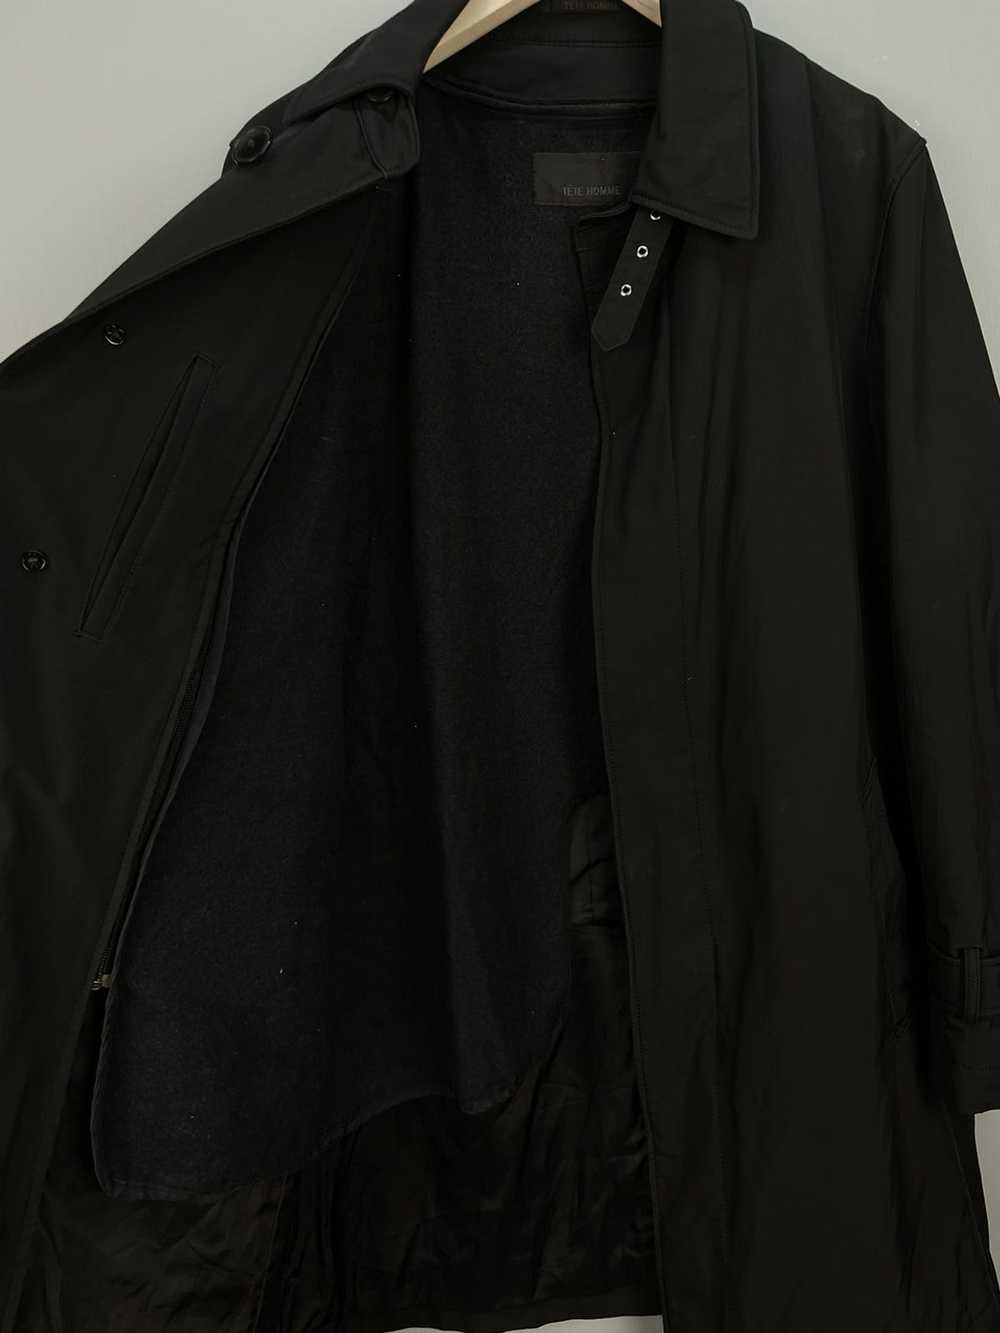 Issey Miyake × Tete Homme Tete Homme jacket - image 4